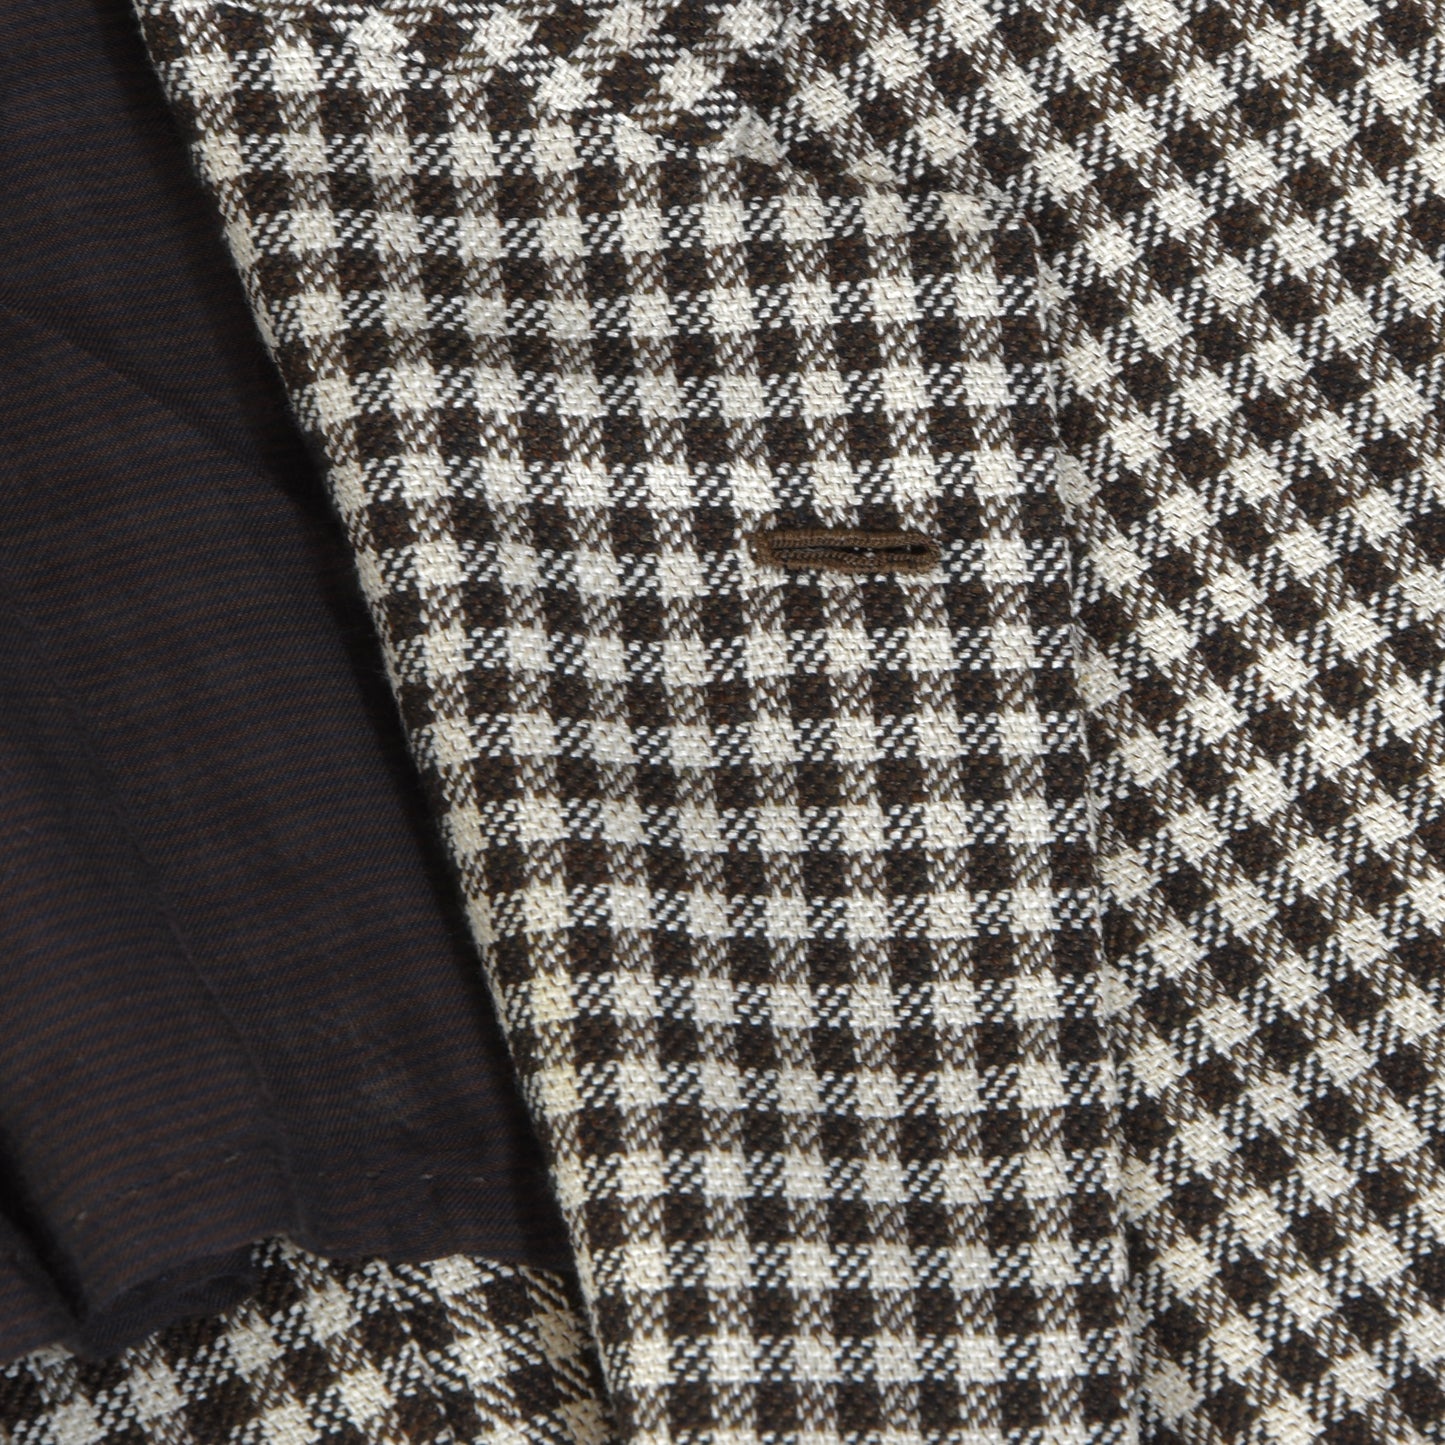 NWD Sartorio Napoli Wool-Silk-Linen Jacket Size 48